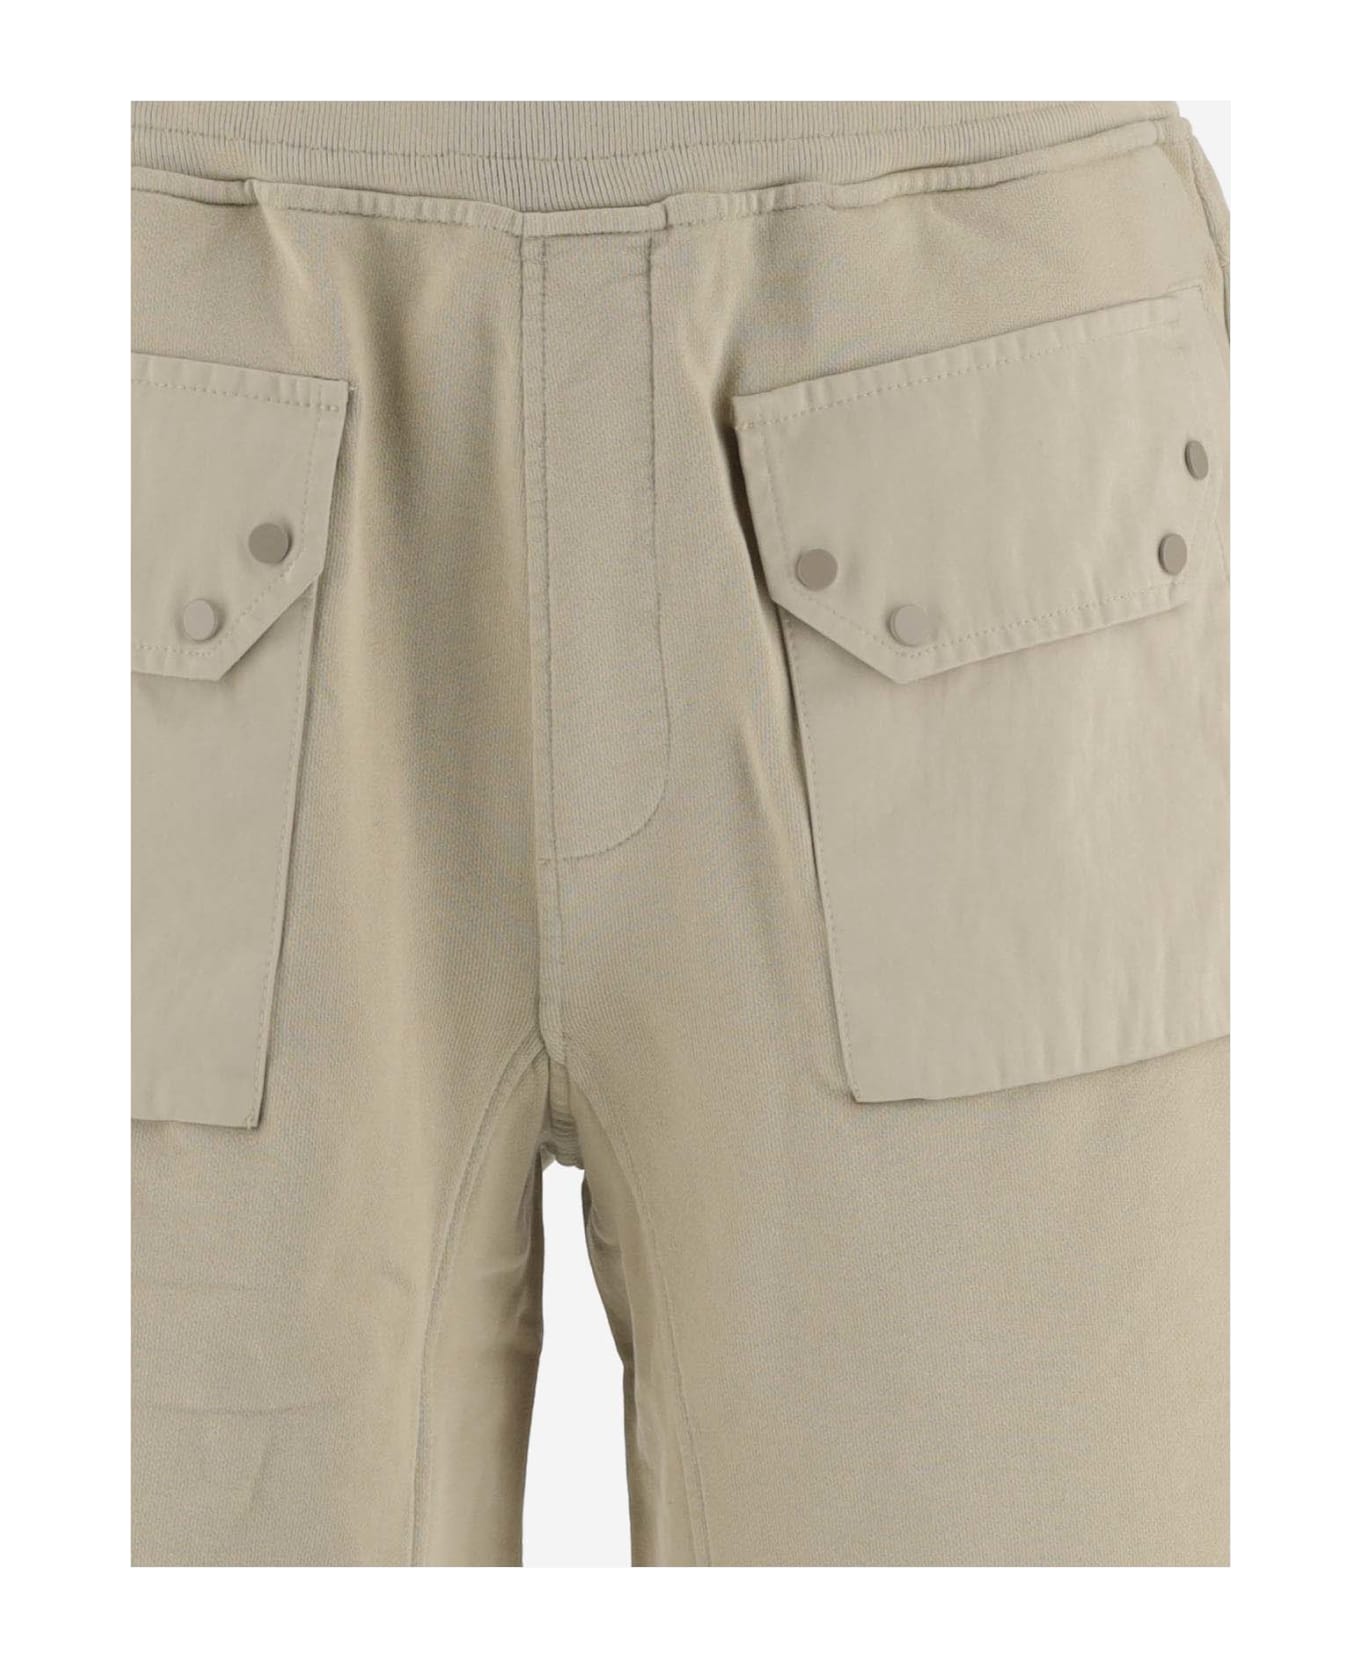 Ten C Cotton Shorts - Beige ショートパンツ